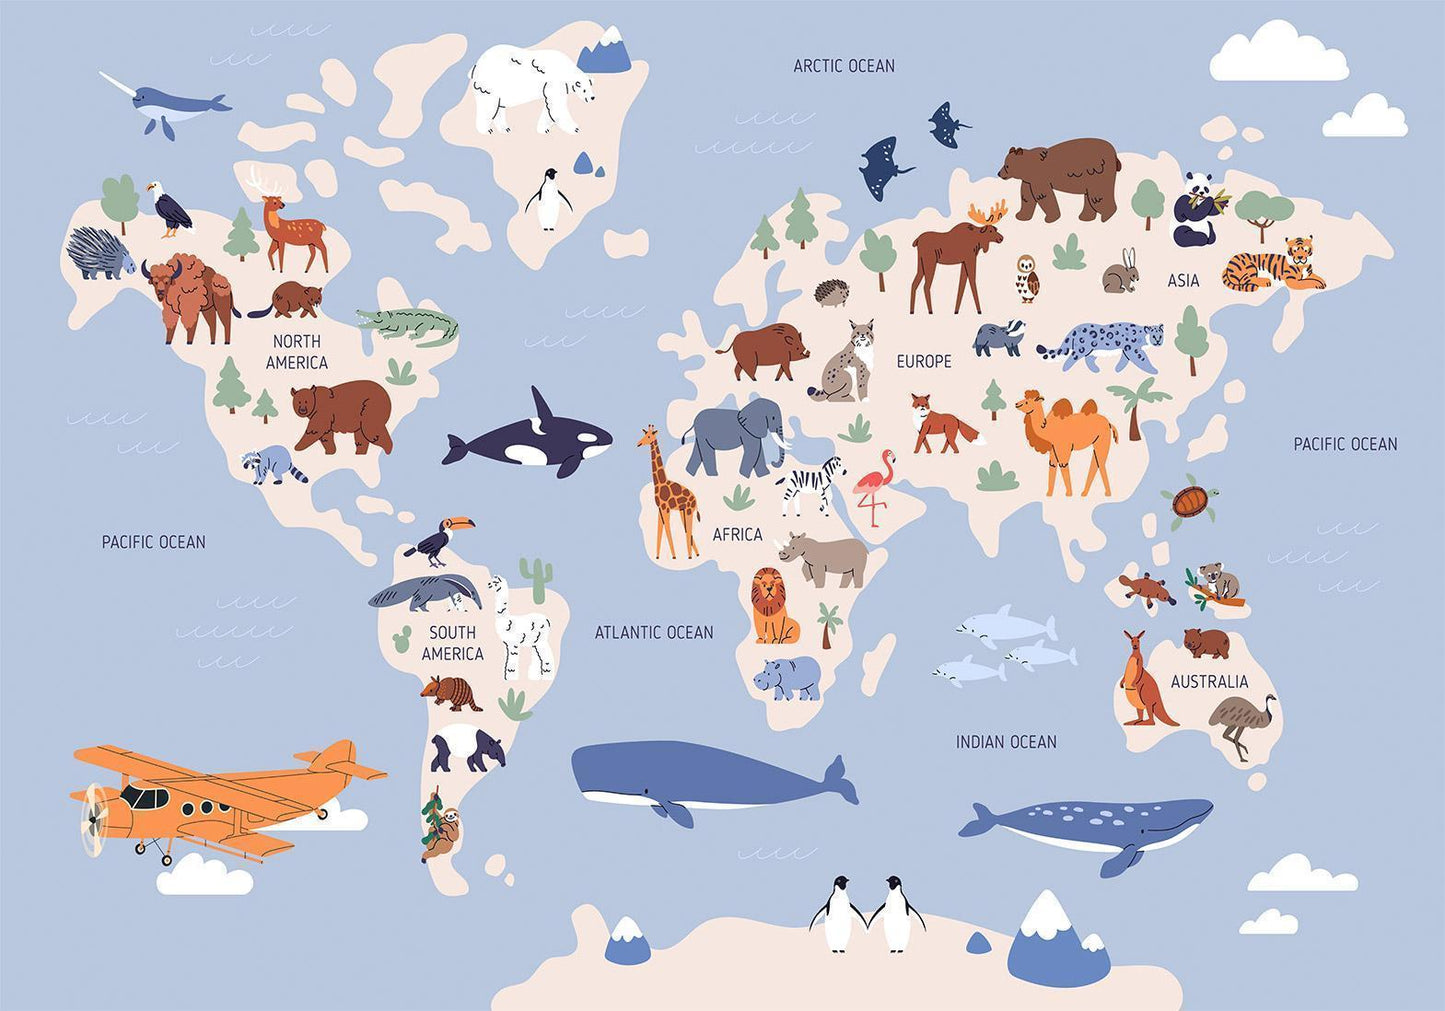 Fotobehang - World Map With Animal Illustrations